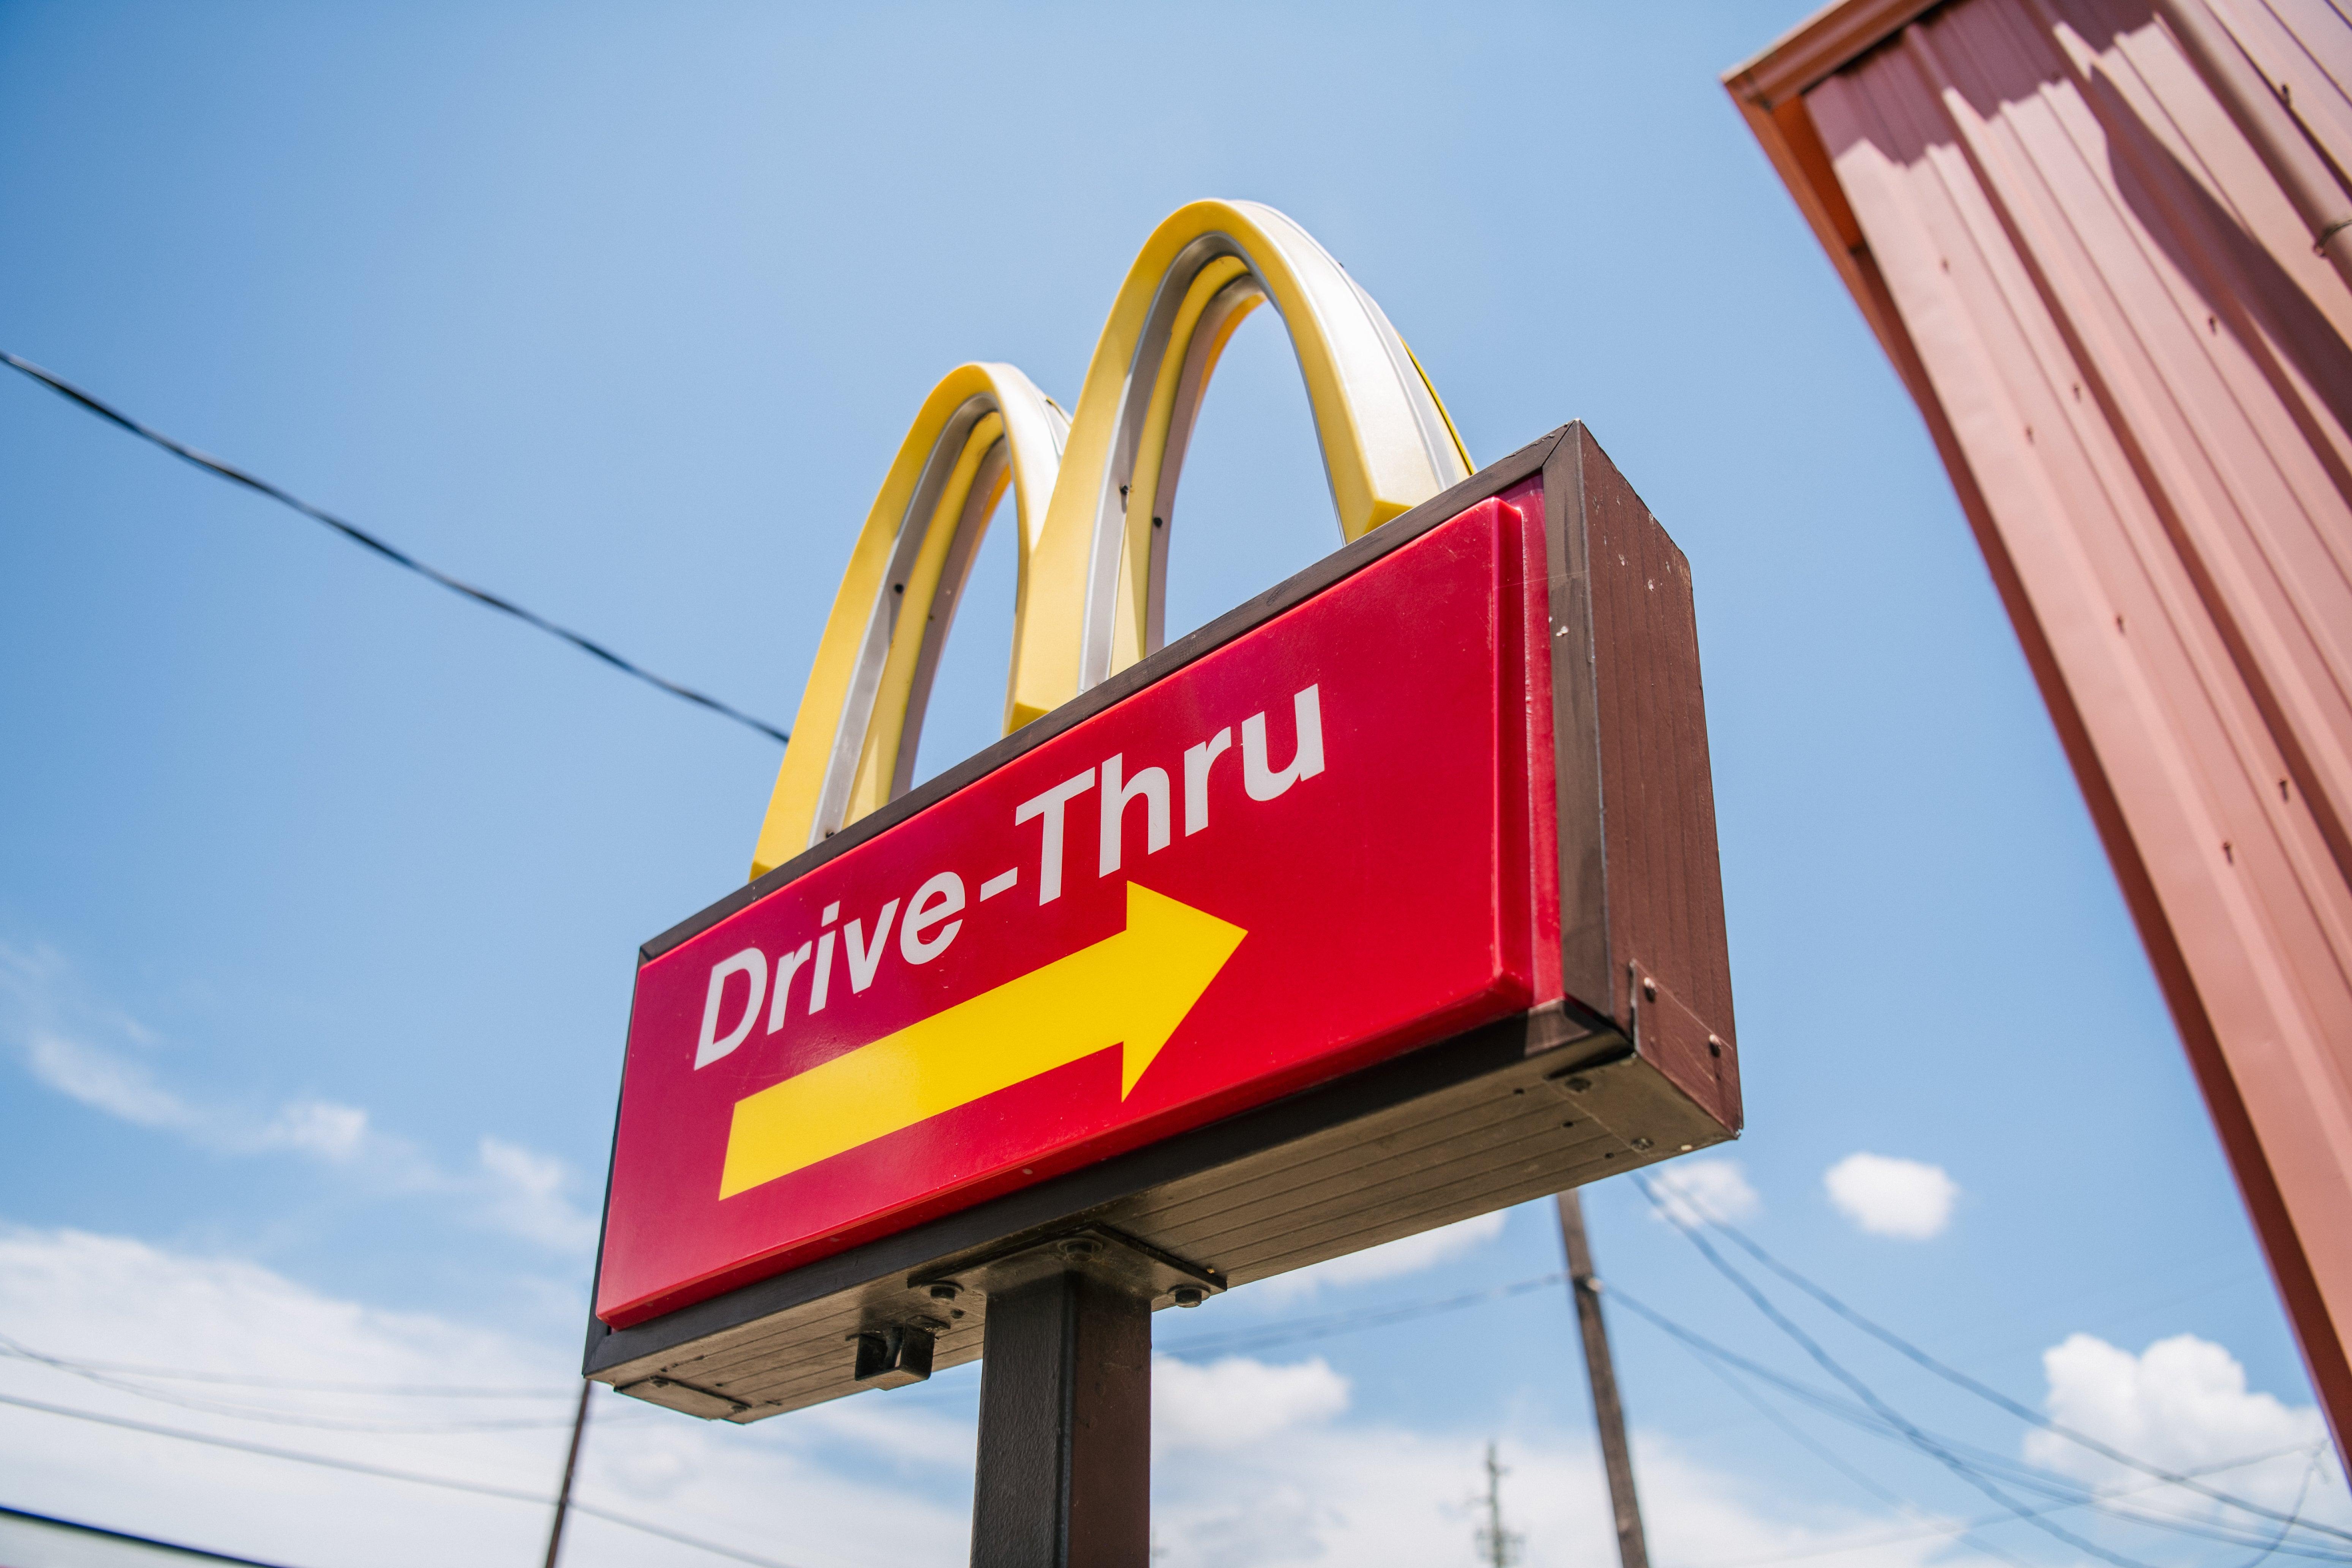 A McDonald’s sign board in Texas